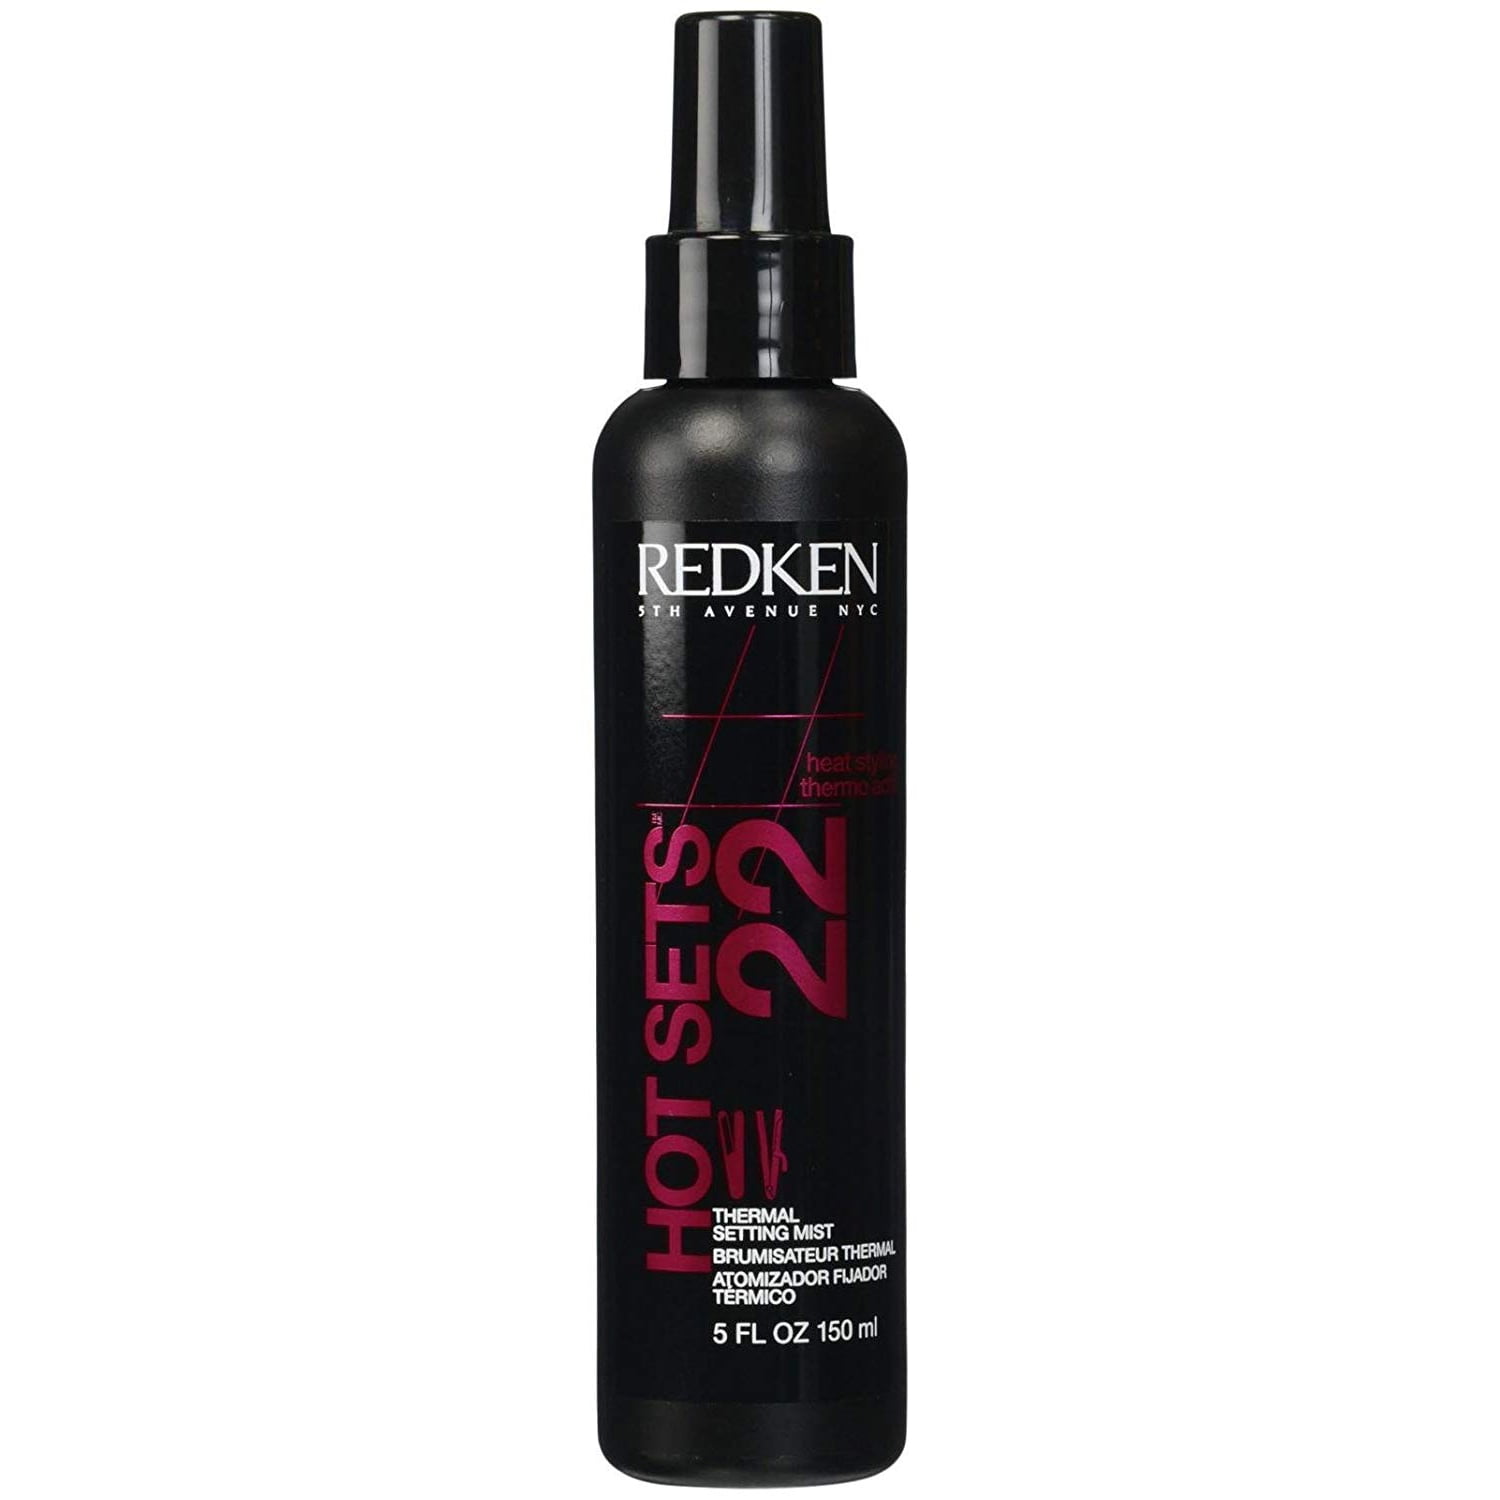 Redken - Redken Hot Sets 22 Thermal Setting Mist Hairspray - 5 Oz Mist ...